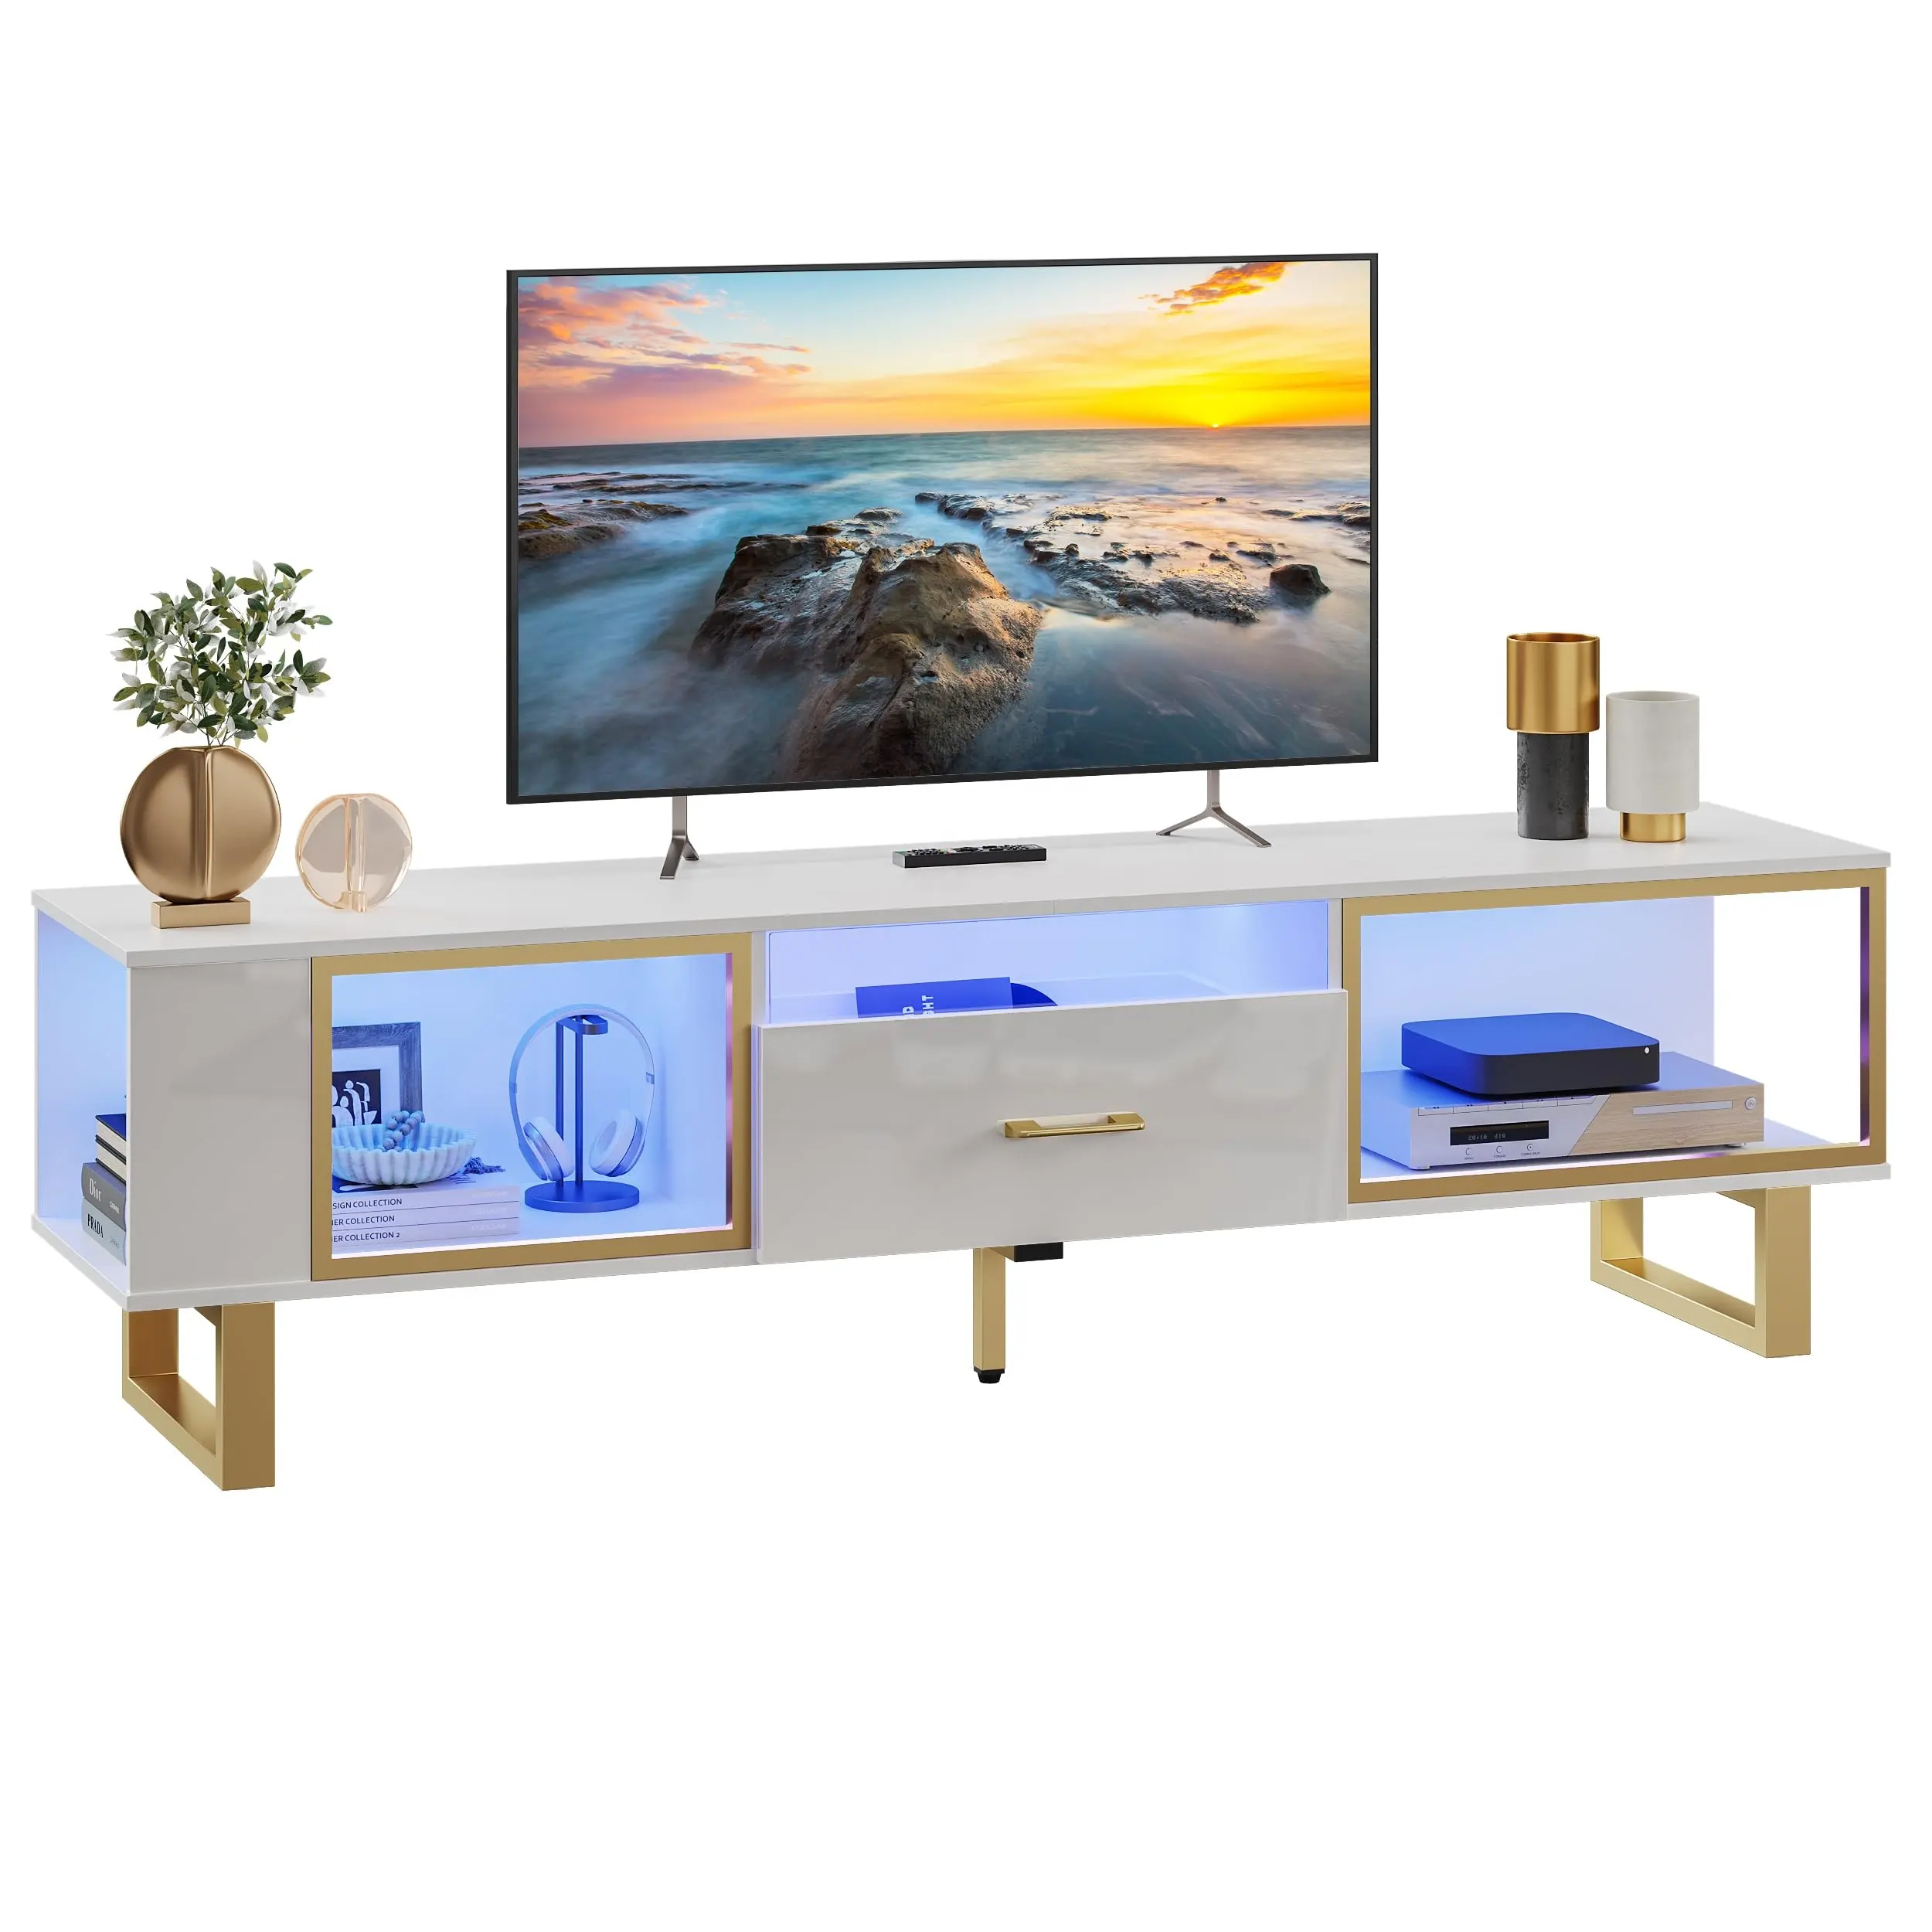 Soporte de TV de madera Blanco alto futurista LED moderno mueble de TV moderno de lujo para sala de estar